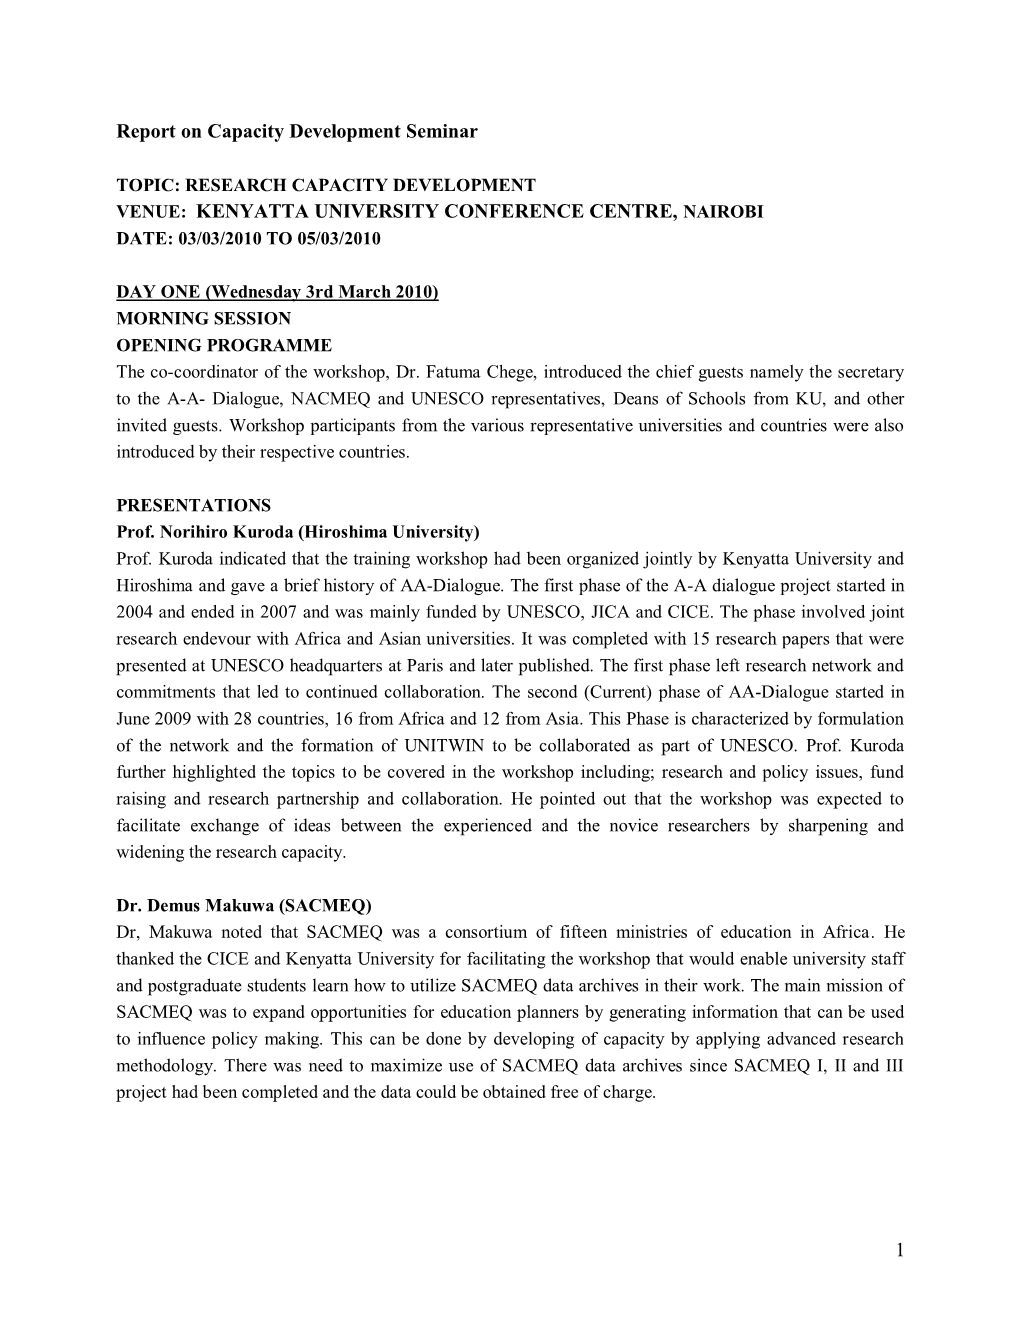 Topic: Research Capacity Development Venue: Kenyatta University Conference Centre, Nairobi Date: 03/03/2010 to 05/03/2010